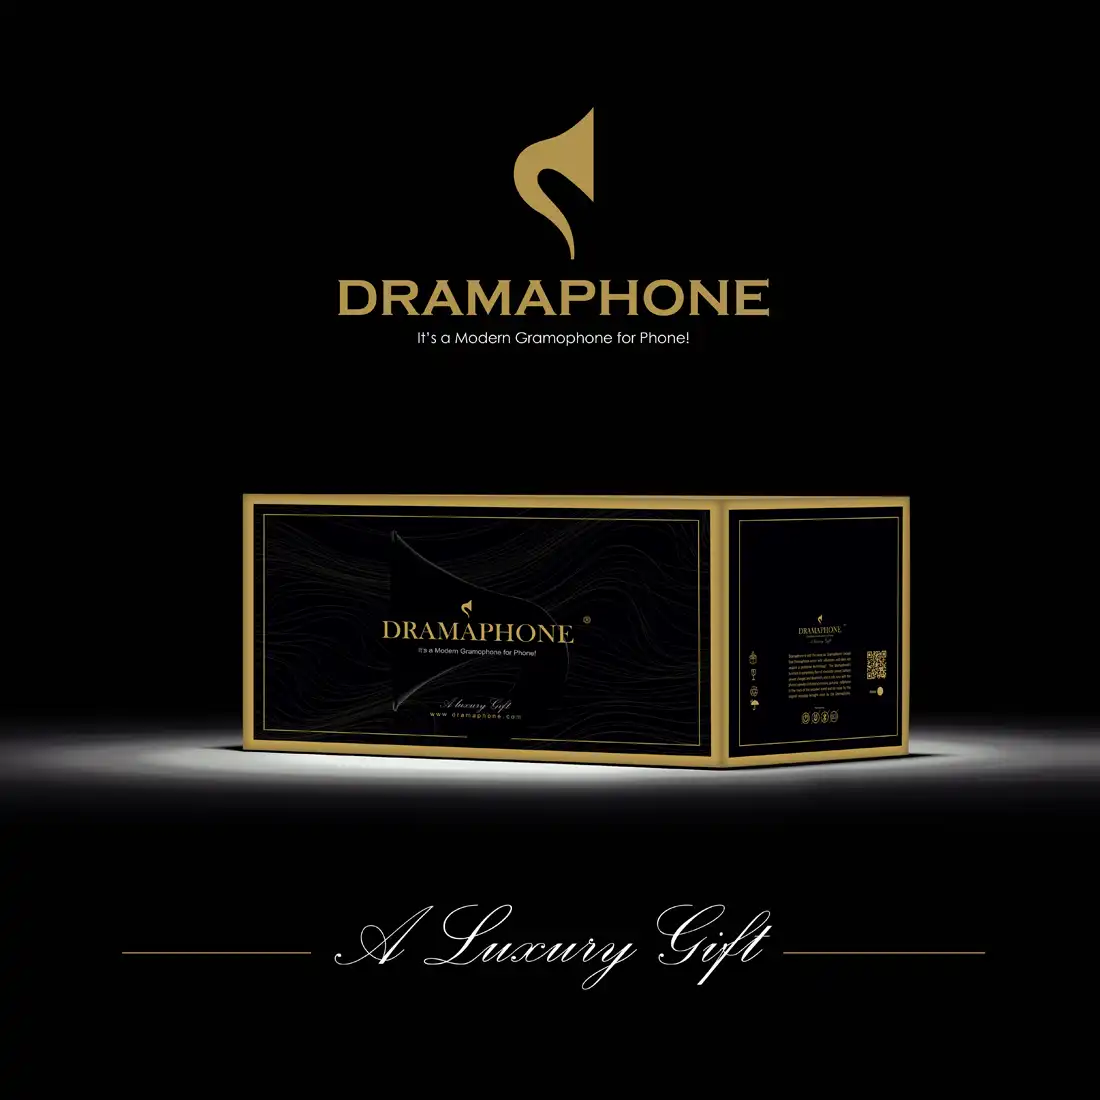 Dramaphone